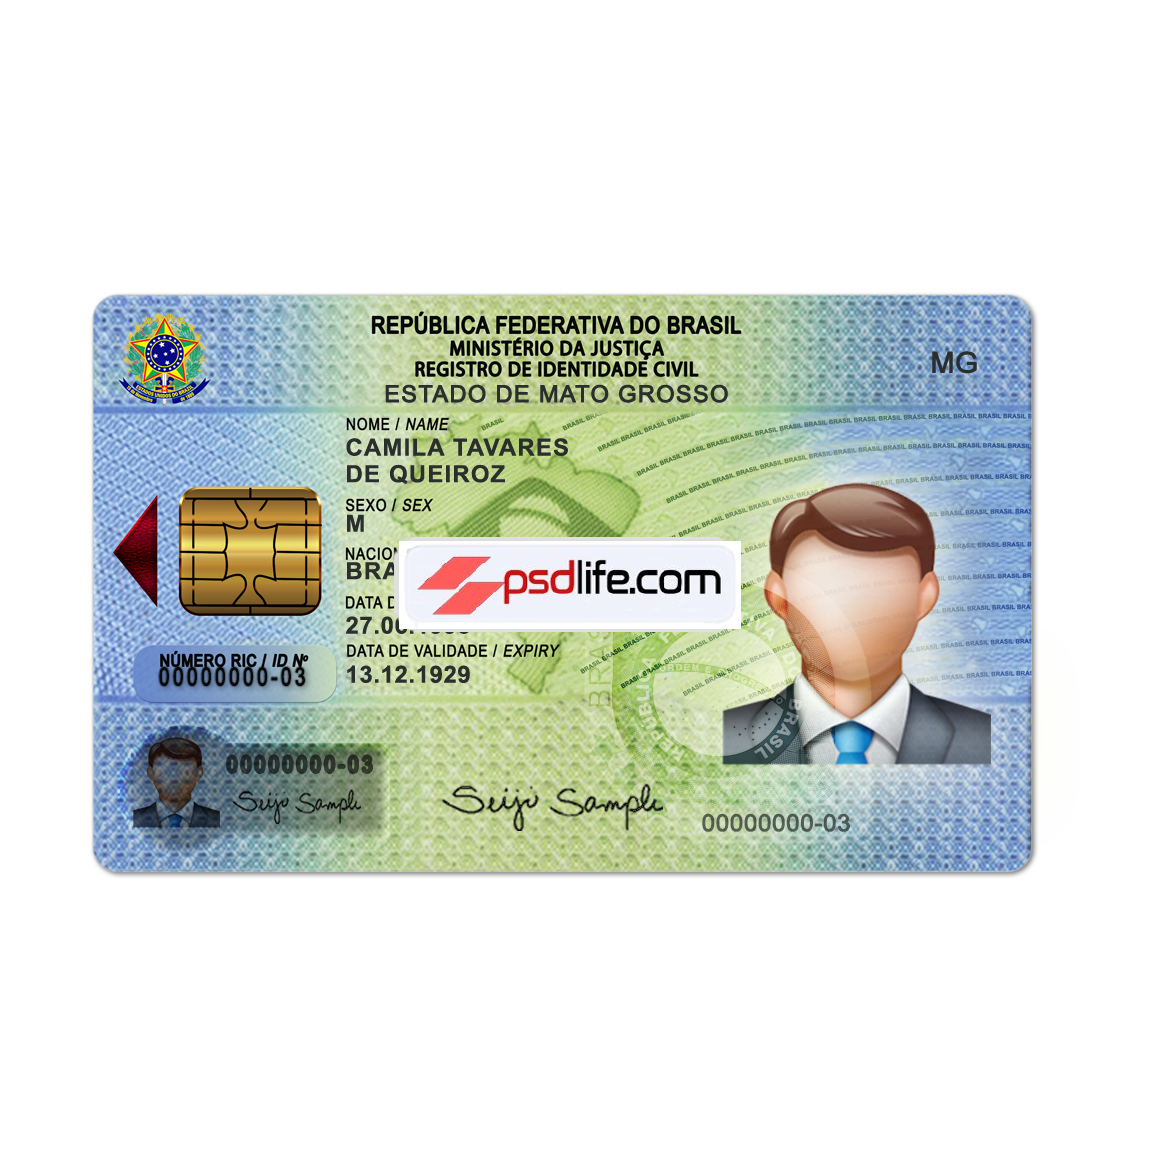 Brazil ID card psd template full editable | Brazil fake id card Template photoshop use for | Modelo psd de cartão de identidade falso do Brasil editável